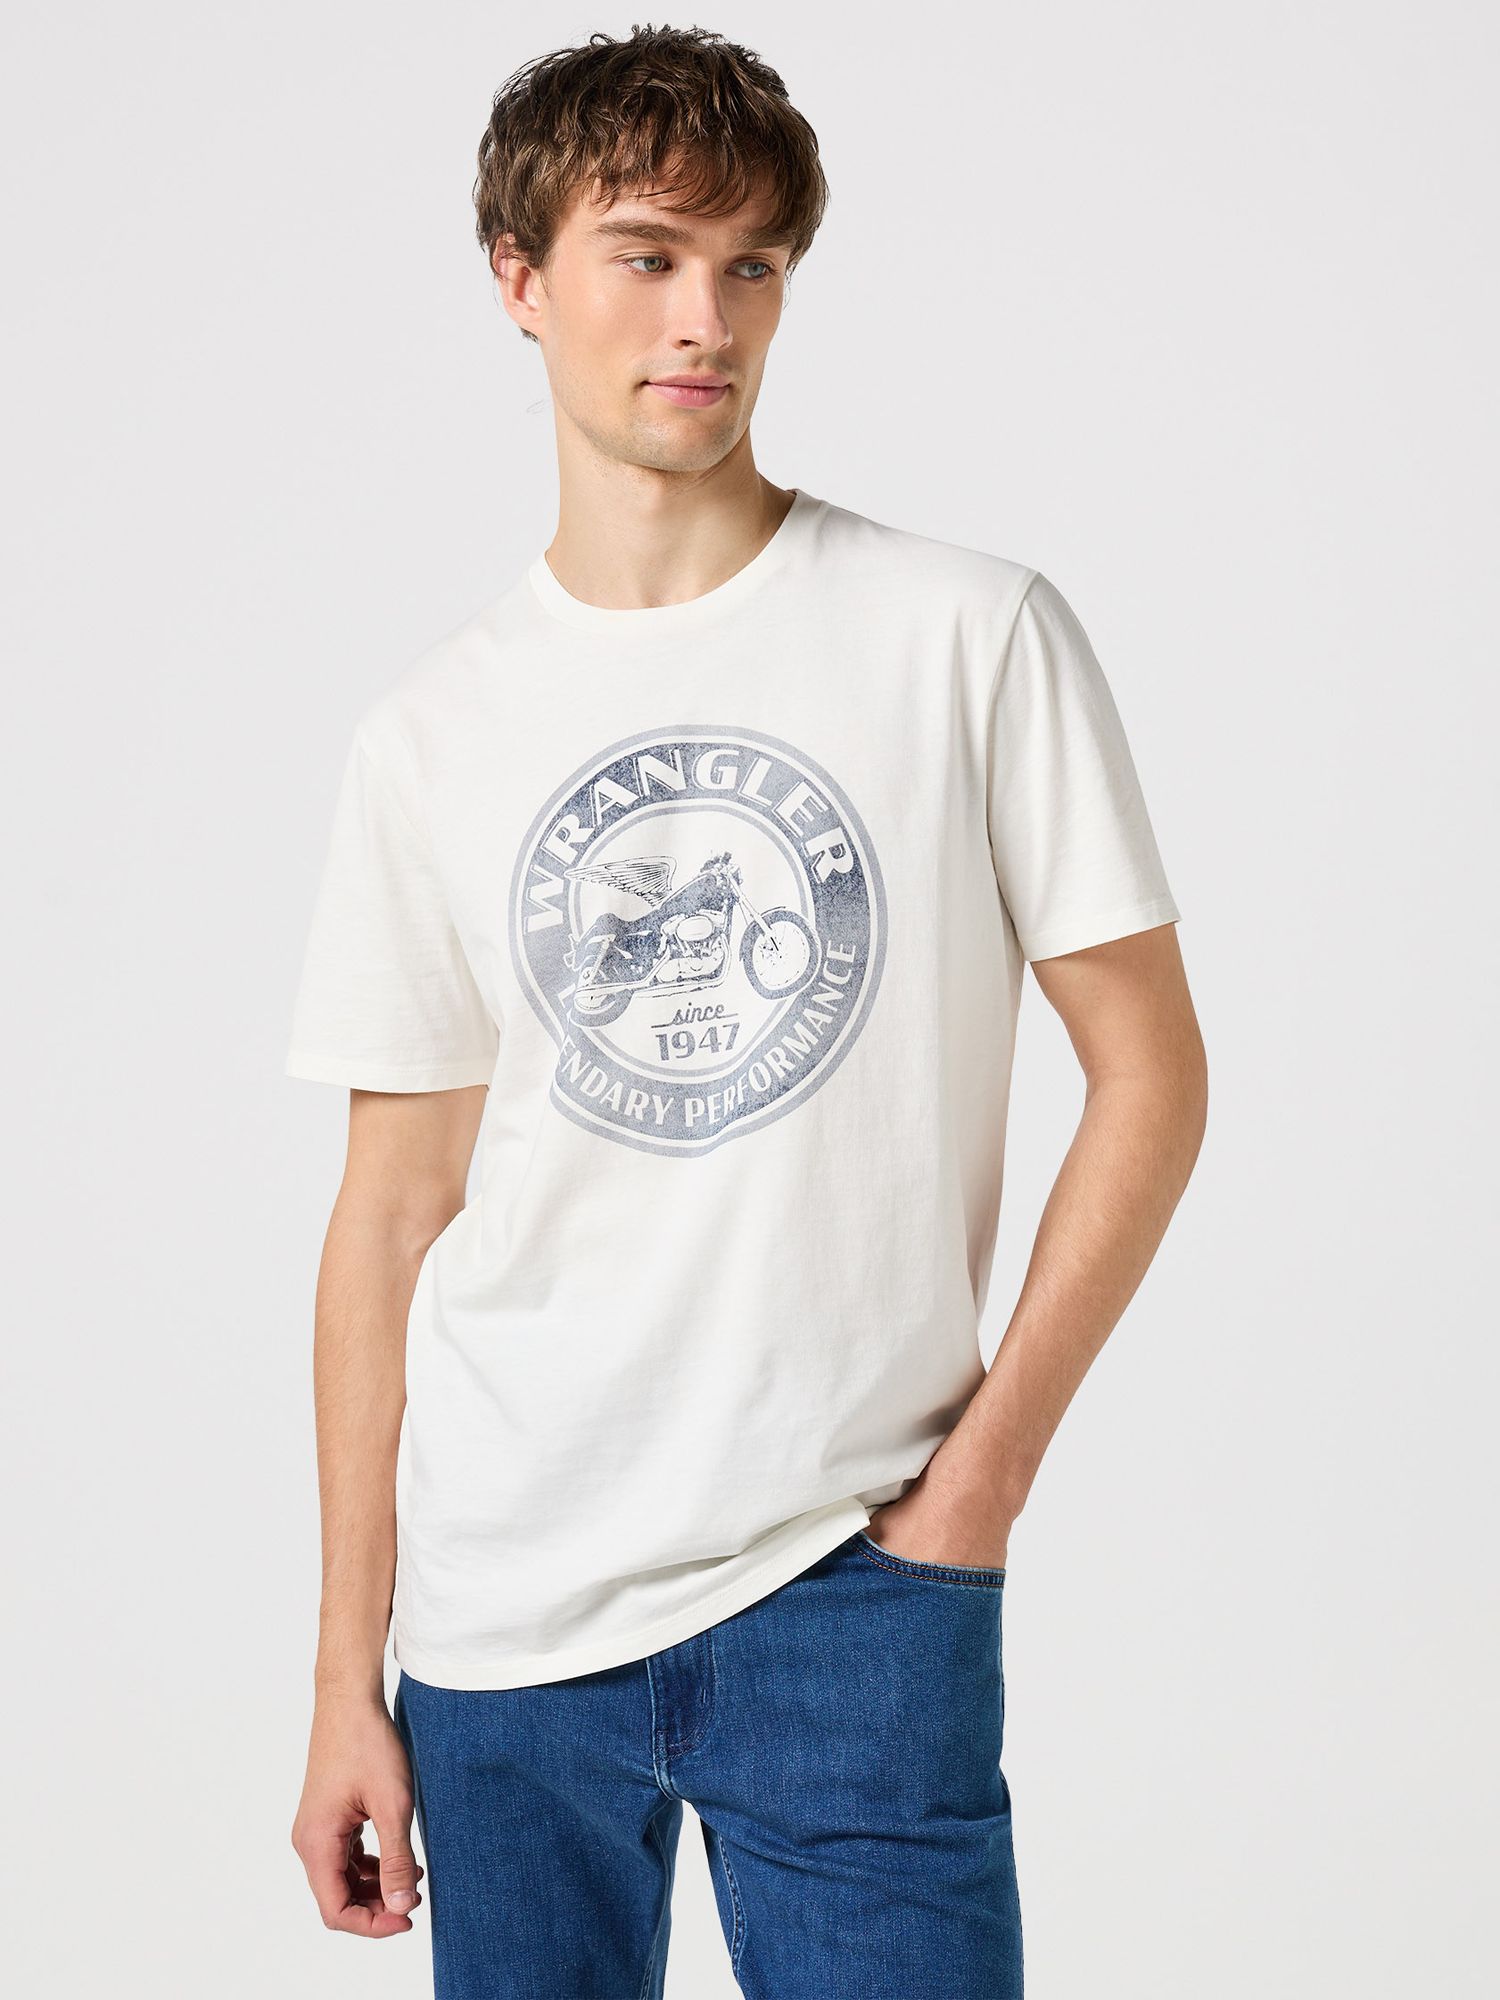 Wrangler Americana T-Shirt, White, XL